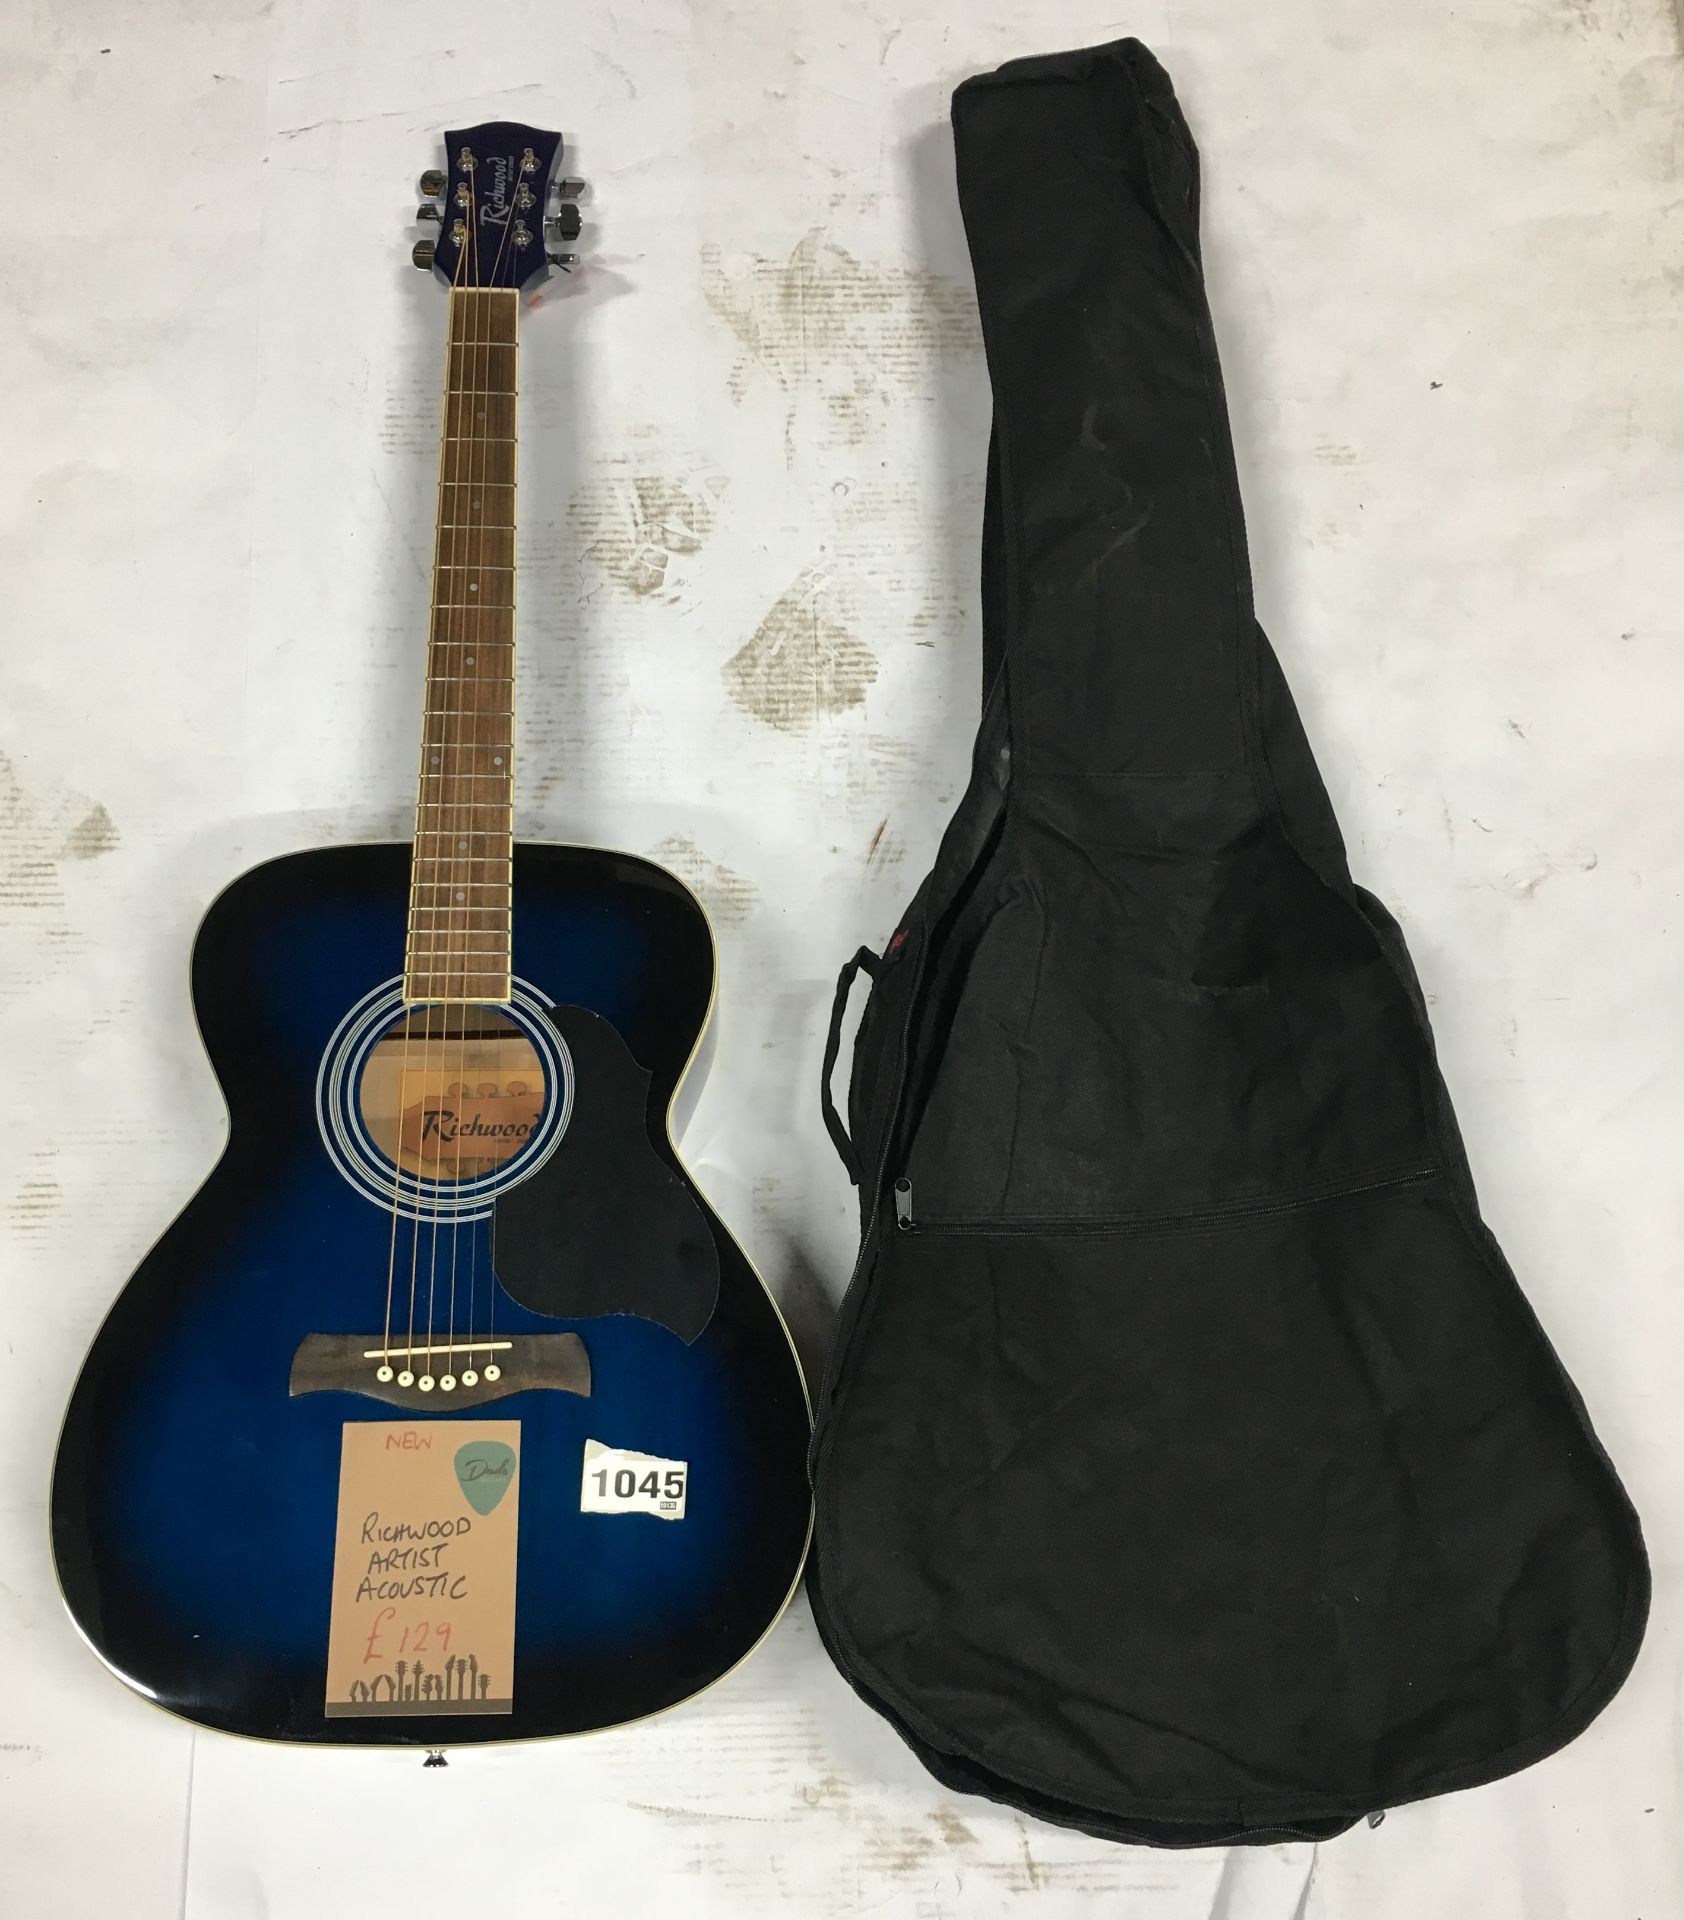 Richwood Artist Acoustic Guitar in Blue | New | In Bag | RRP £129